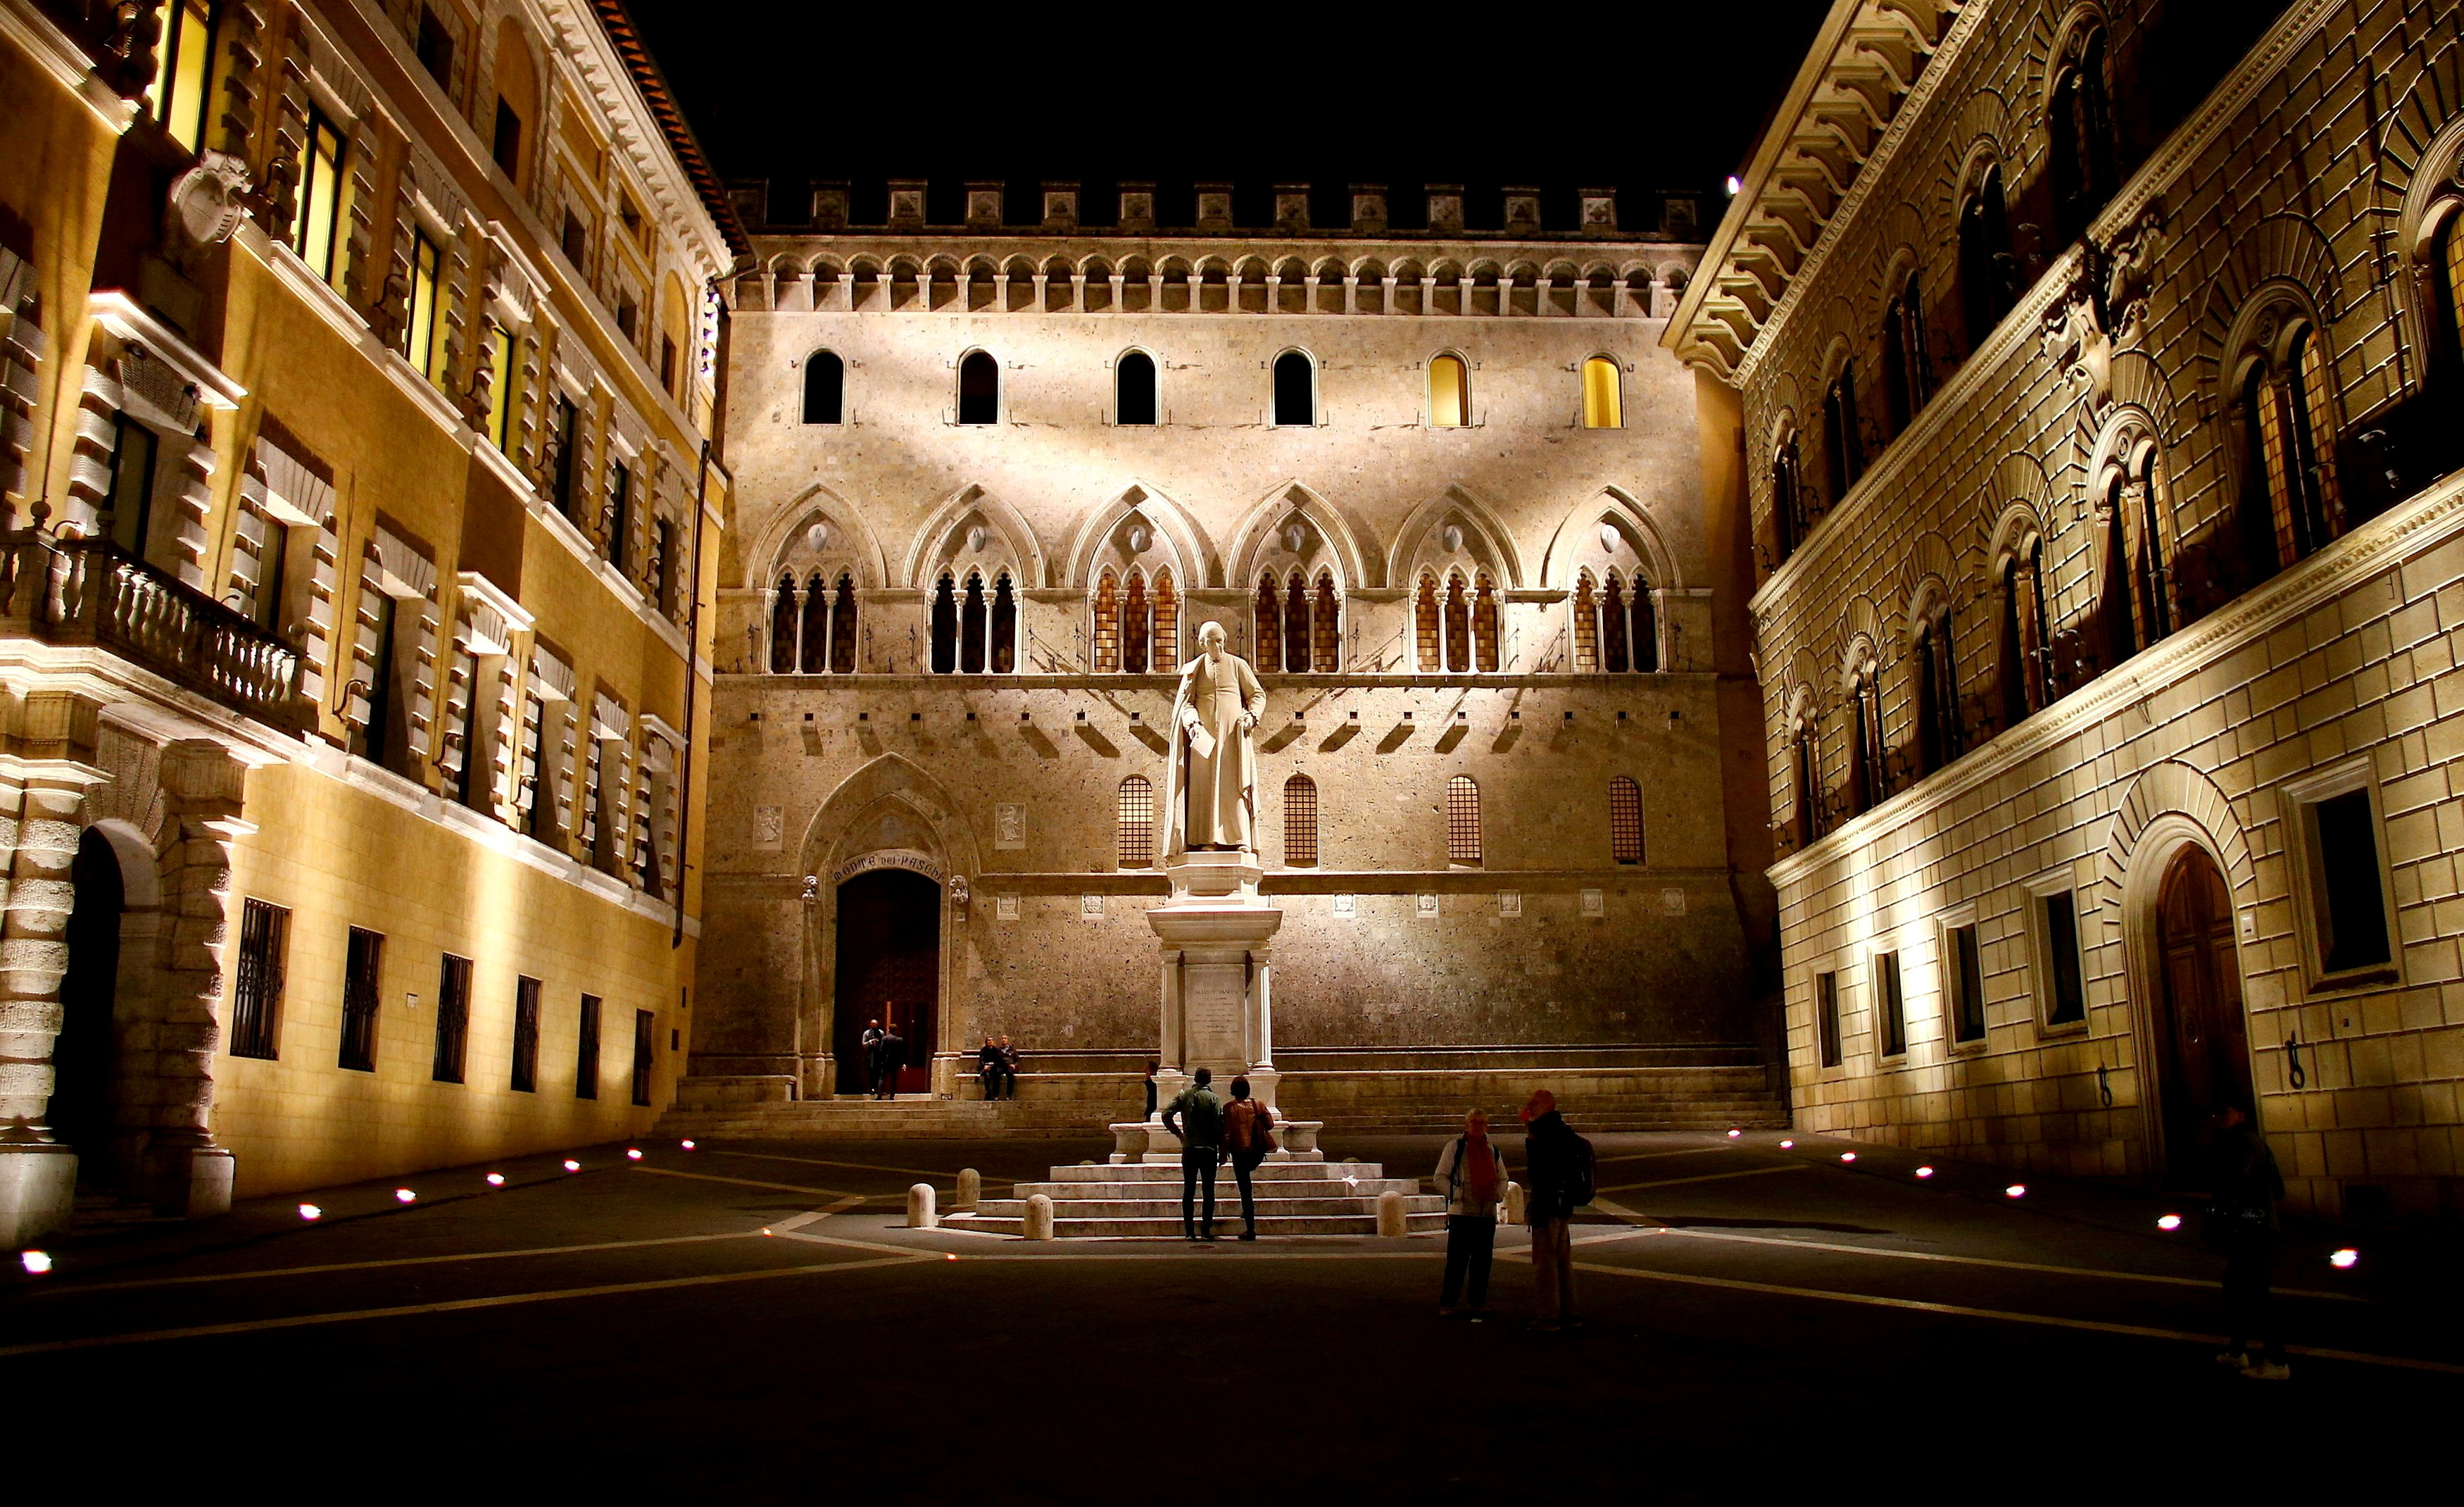 Banca Monte dei Paschi's headquarters in Siena, Italy